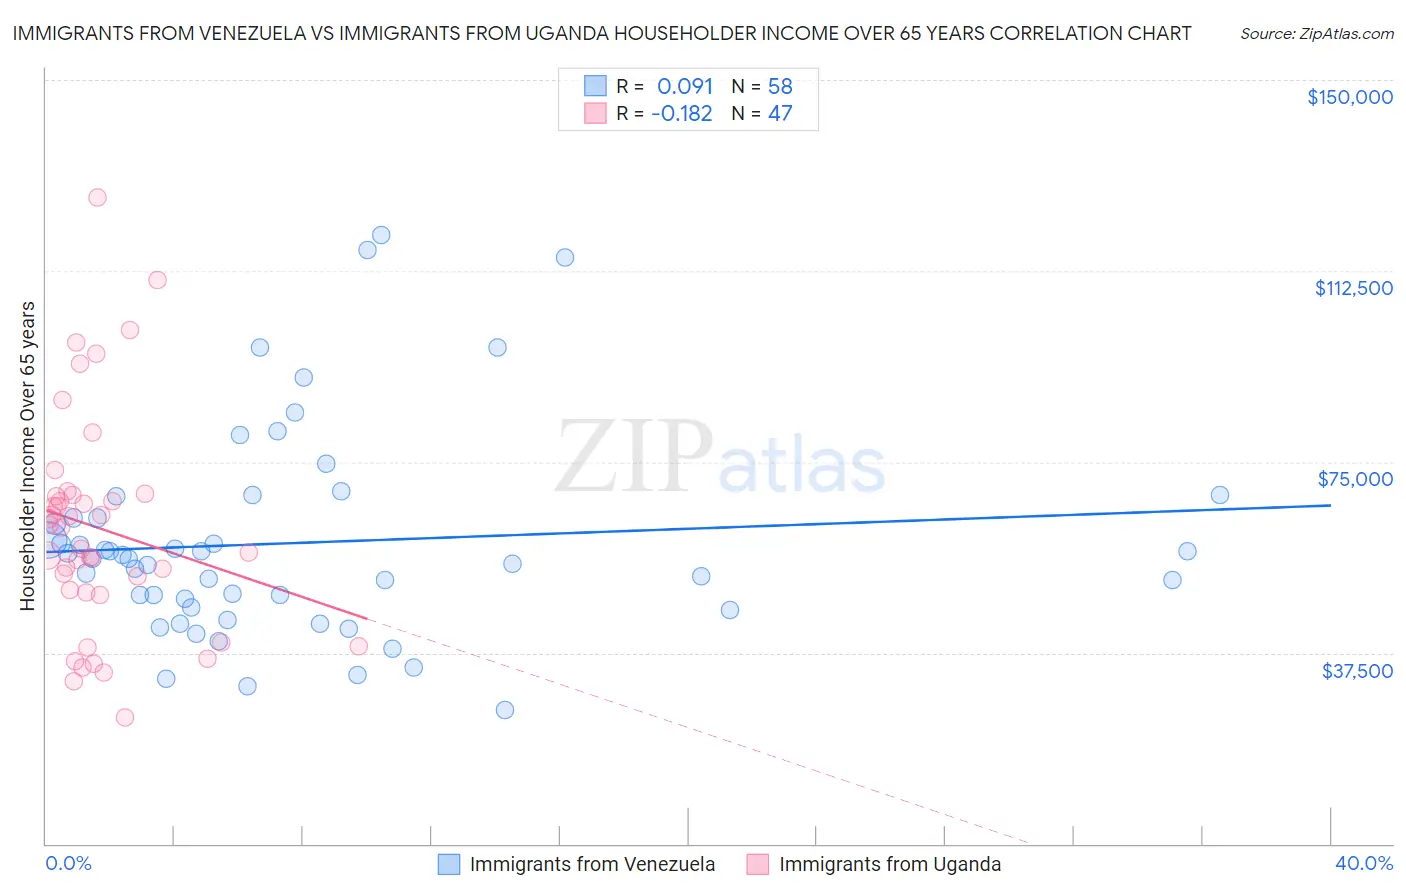 Immigrants from Venezuela vs Immigrants from Uganda Householder Income Over 65 years